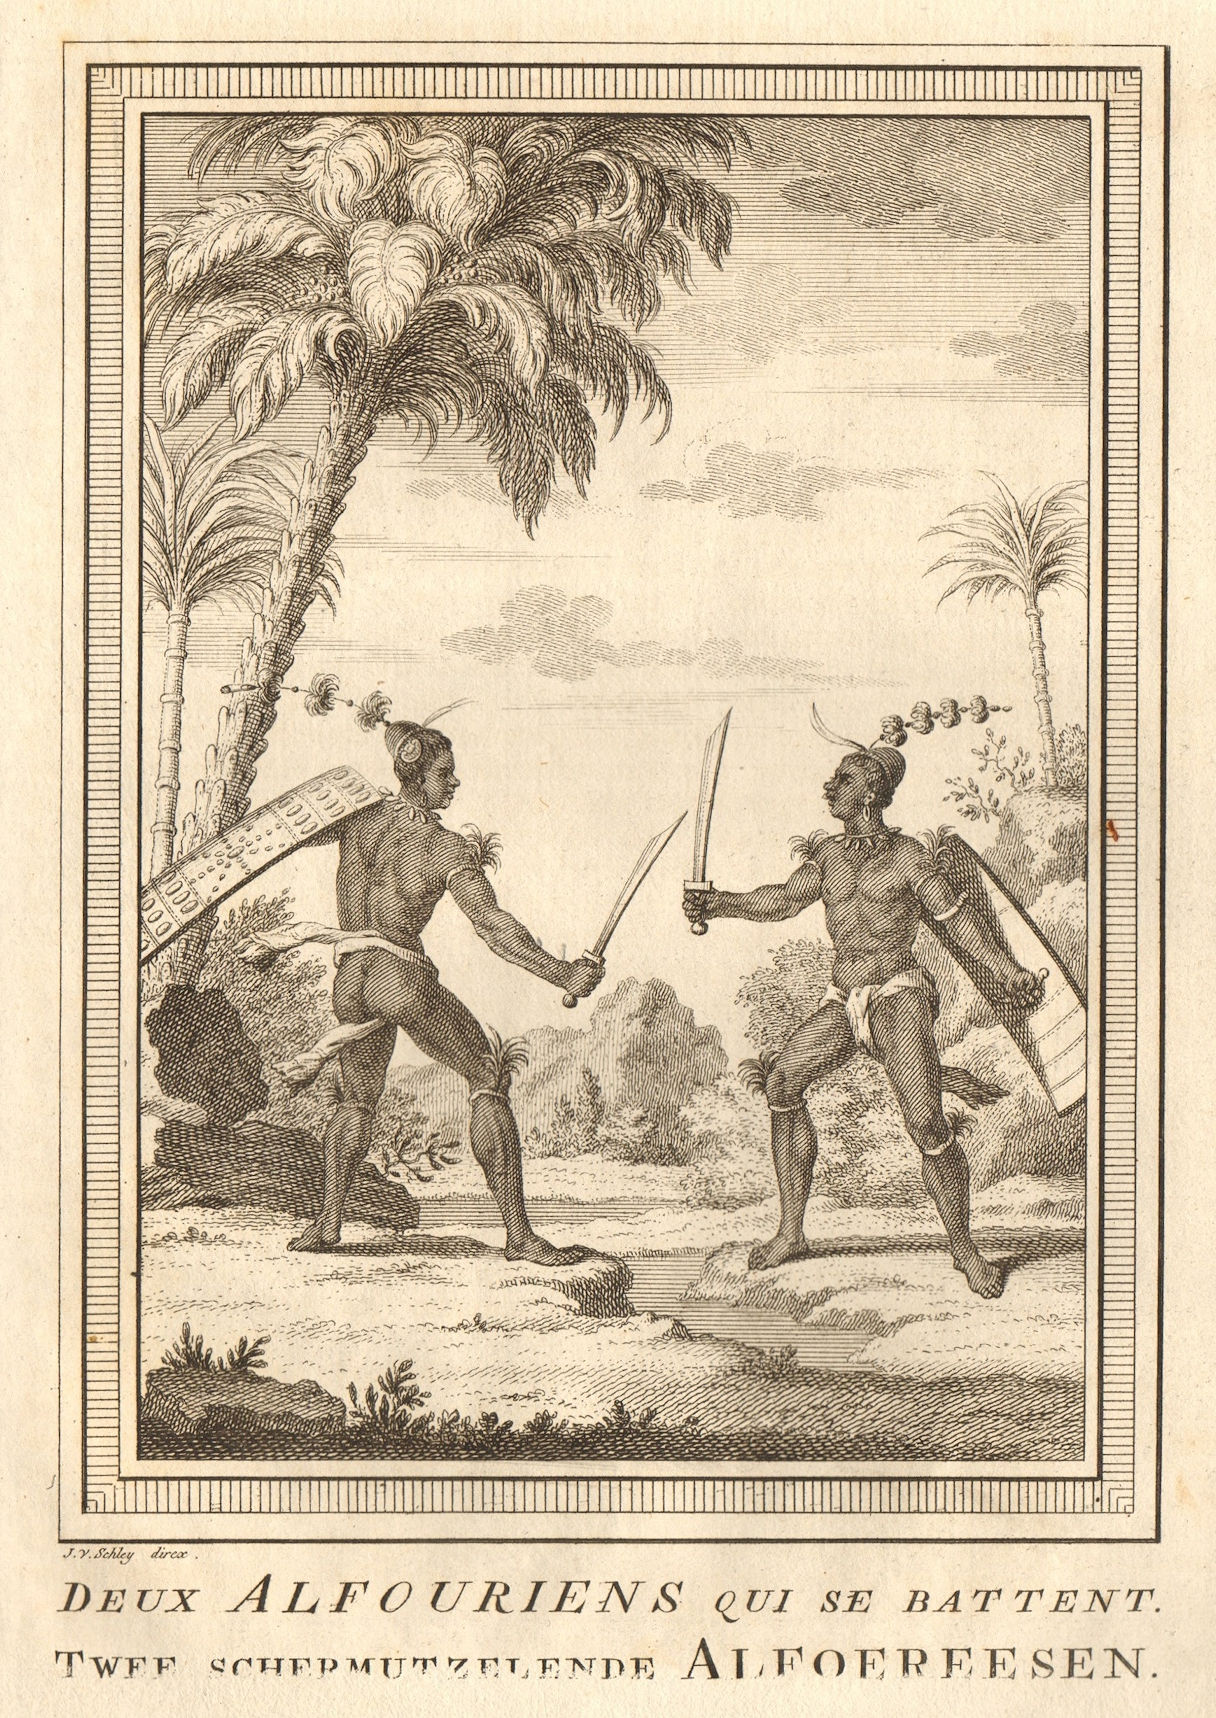 'Deux Alfouriens qui se battent'. Nuaulu fighting. Seram, Maluku. SCHLEY 1755